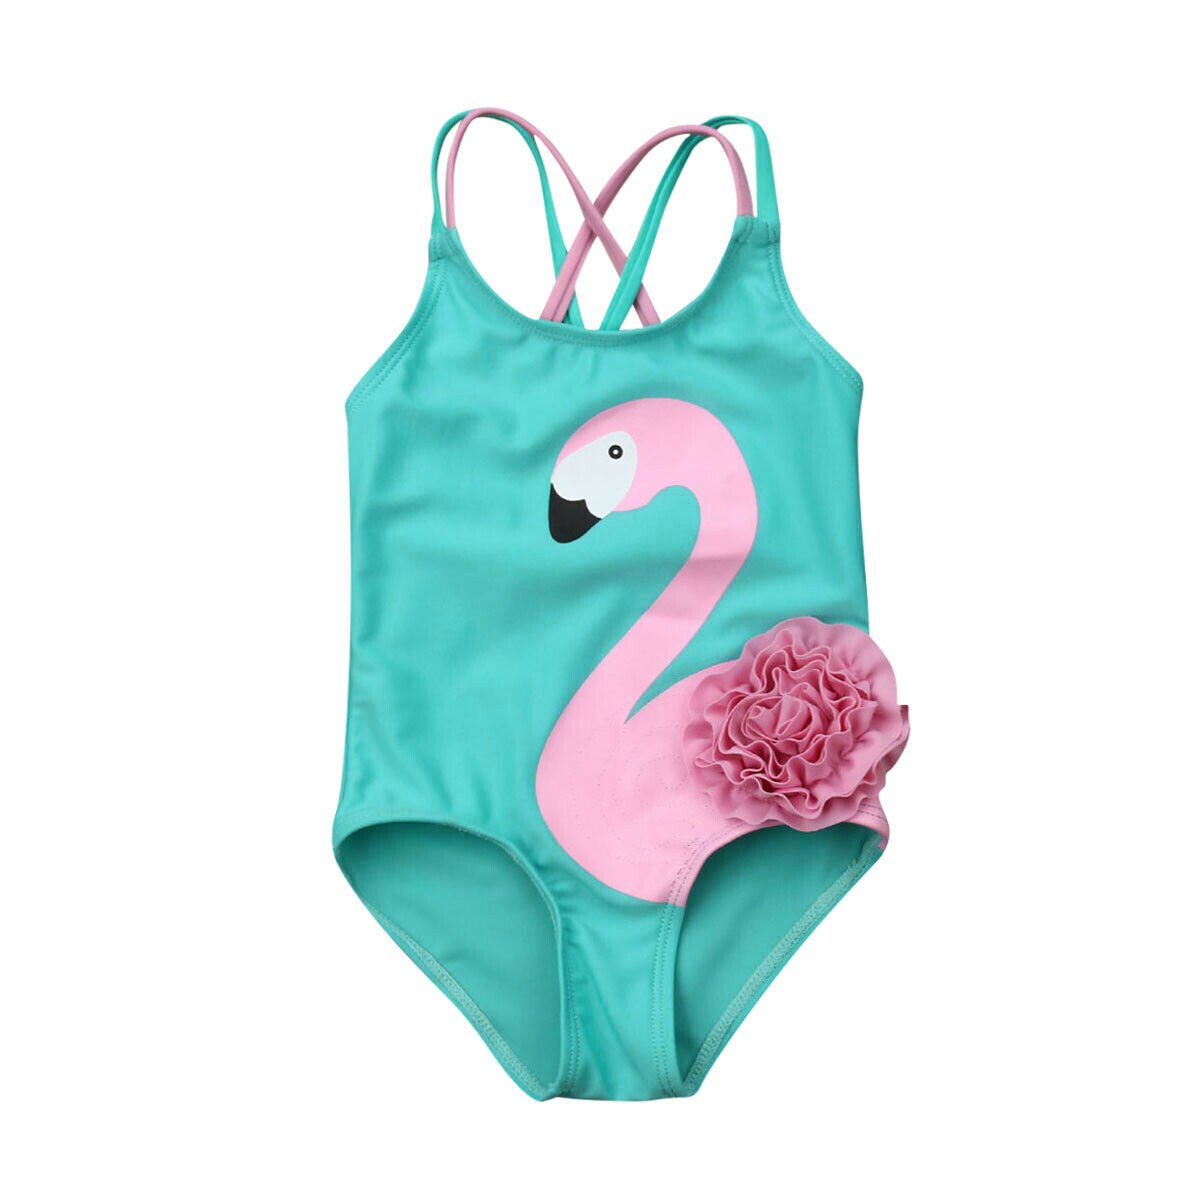 Toddler kid baby piger flamingo bikini badetøj badedragt strand badedragt 6m-5t